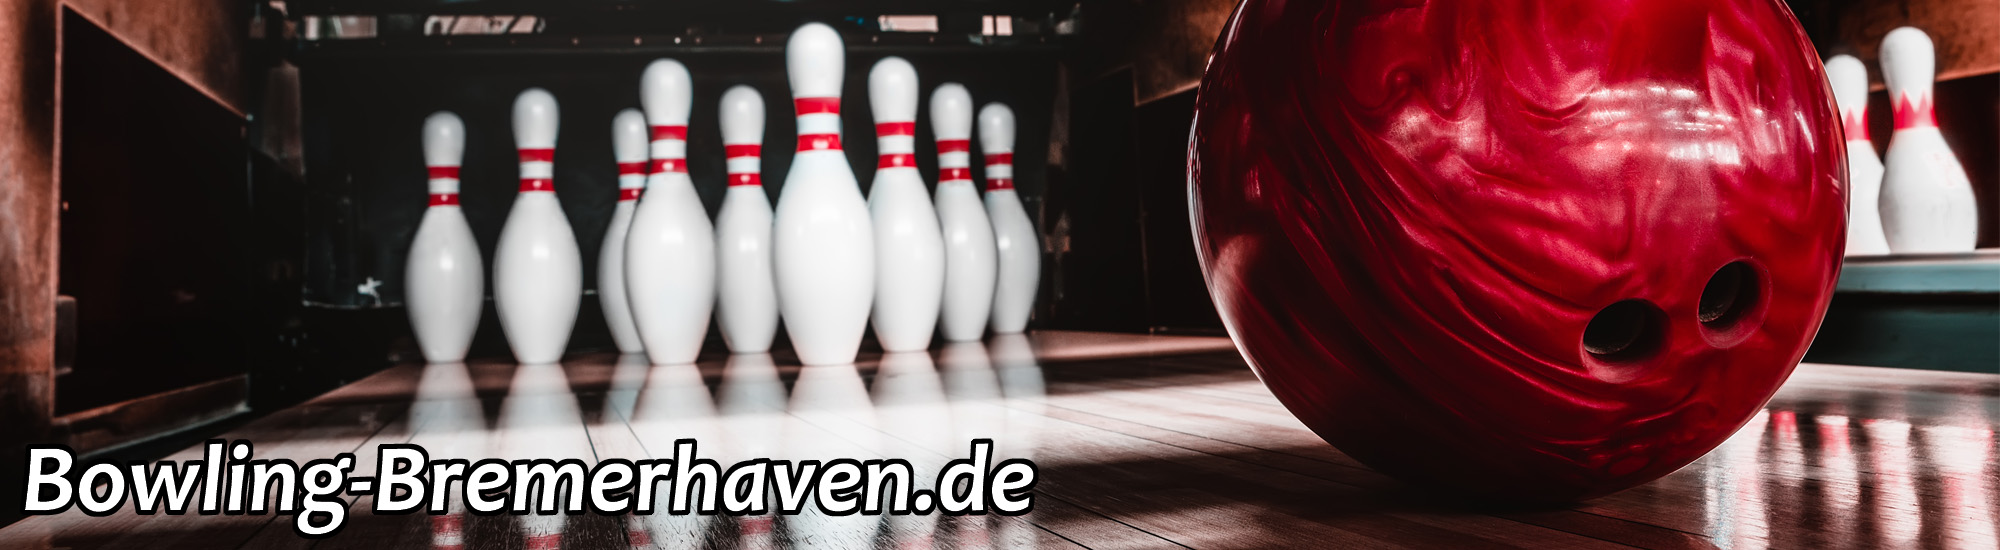 Bowling-Bremerhaven-HEADER-GRAFIK